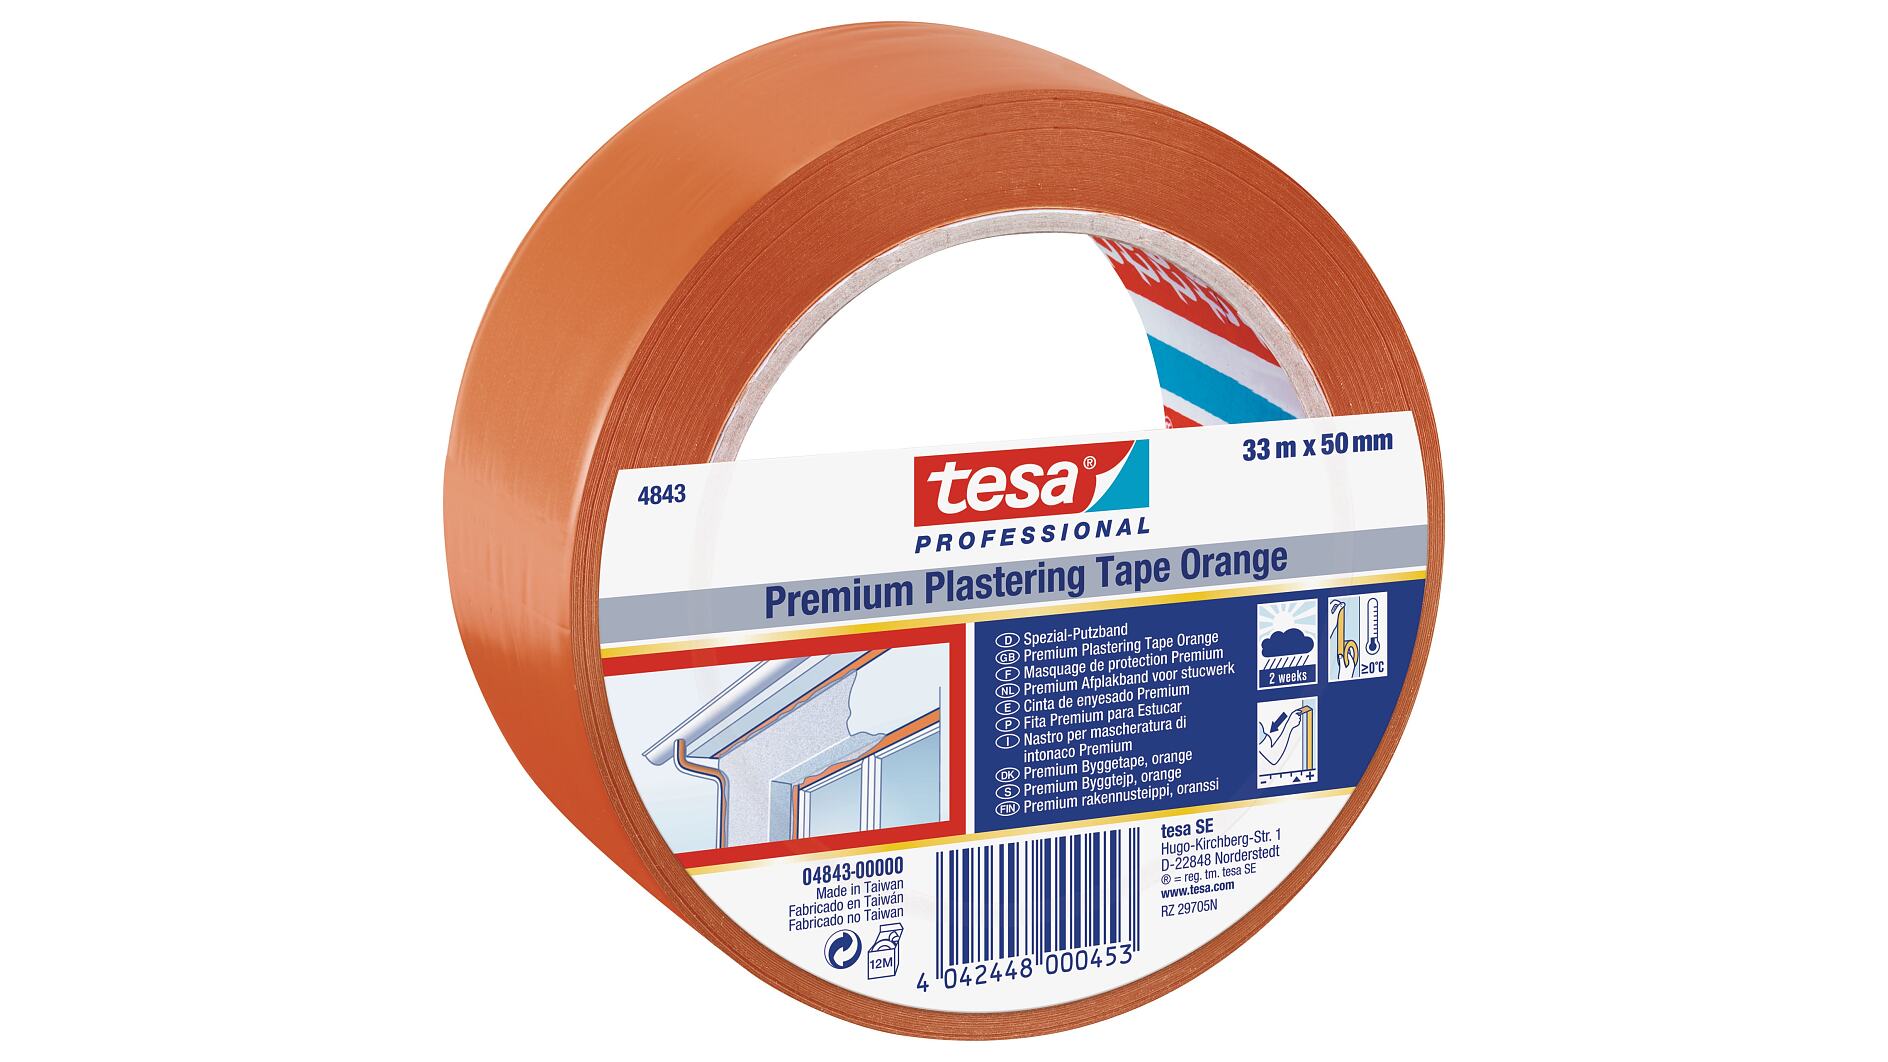 tesa® Professional 4843 Premium Plastering Tape Orange - tesa